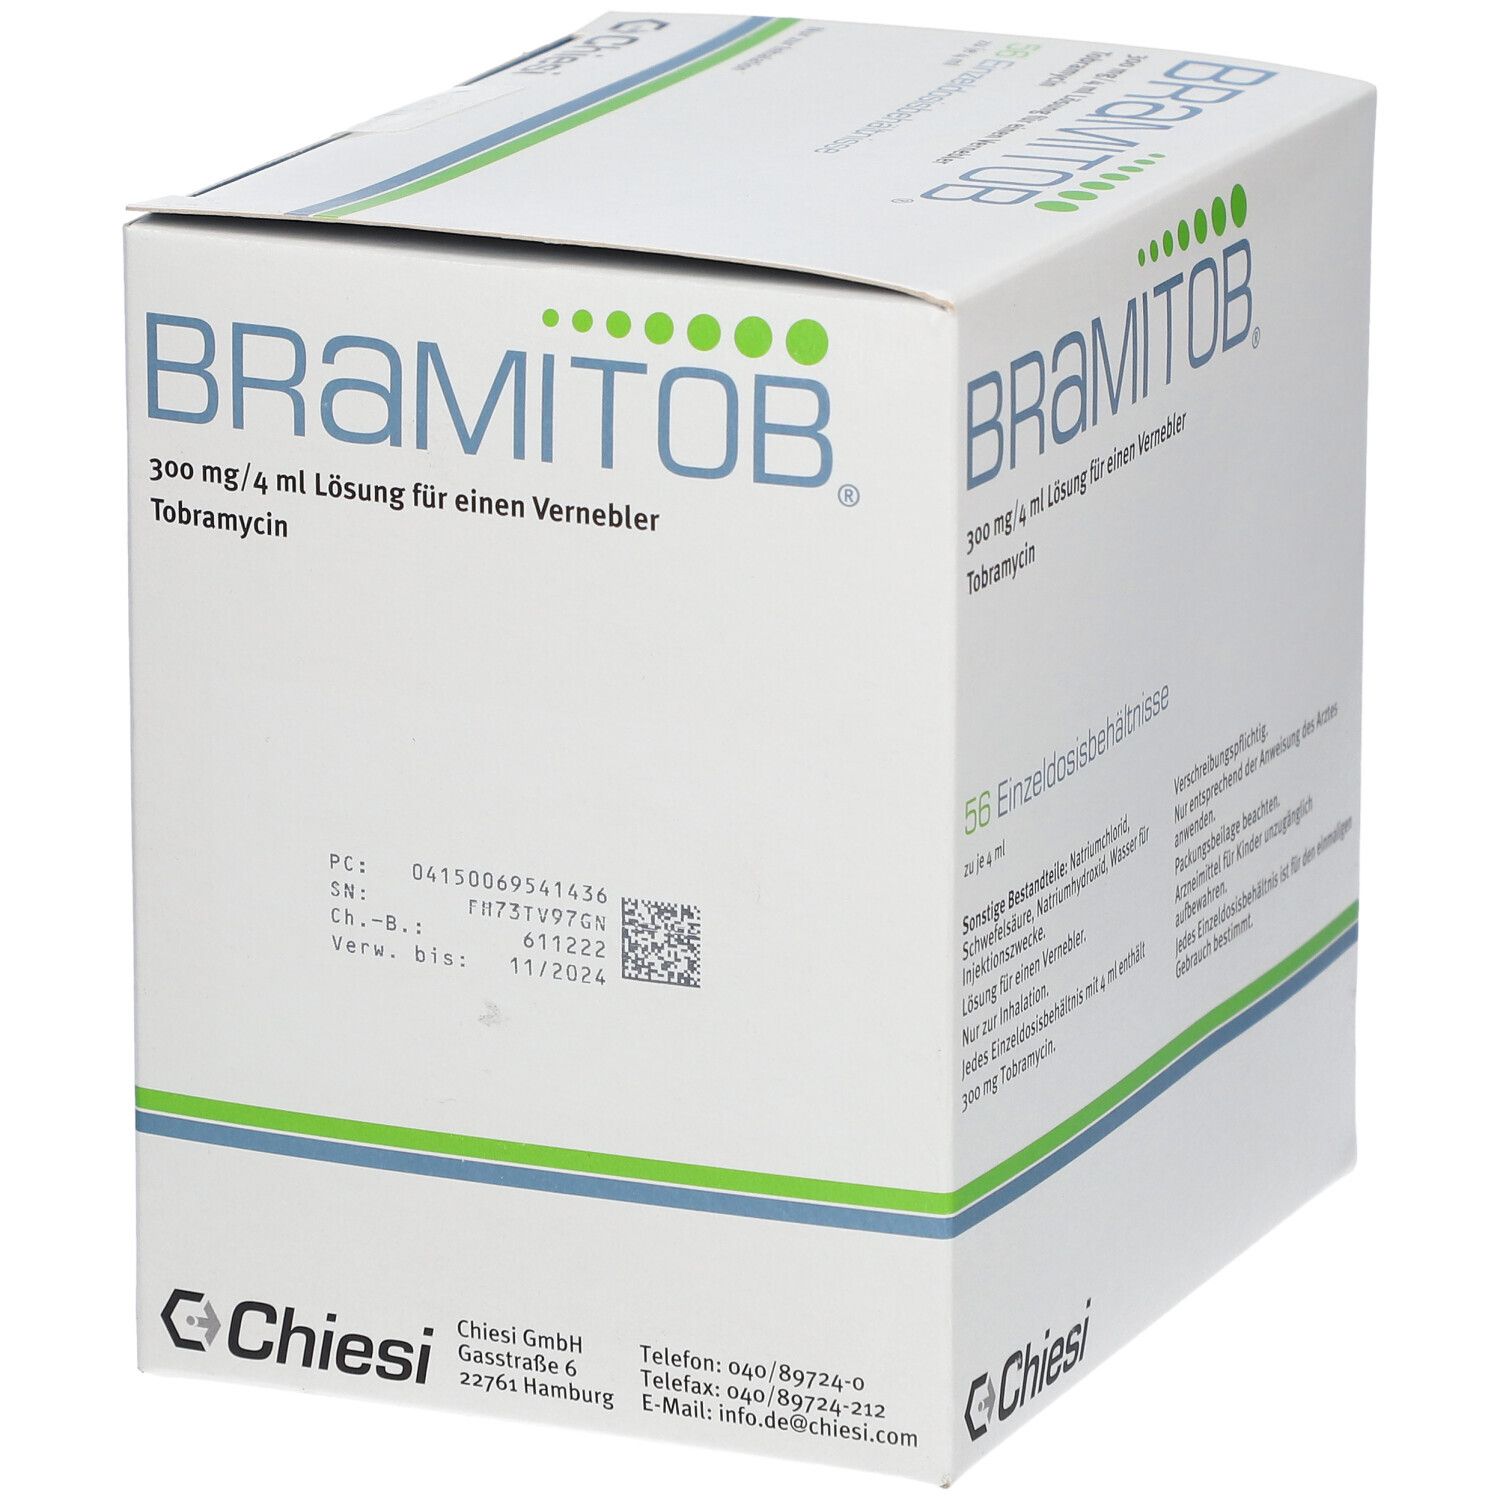 BRAMITOB® 300 mg/4 ml